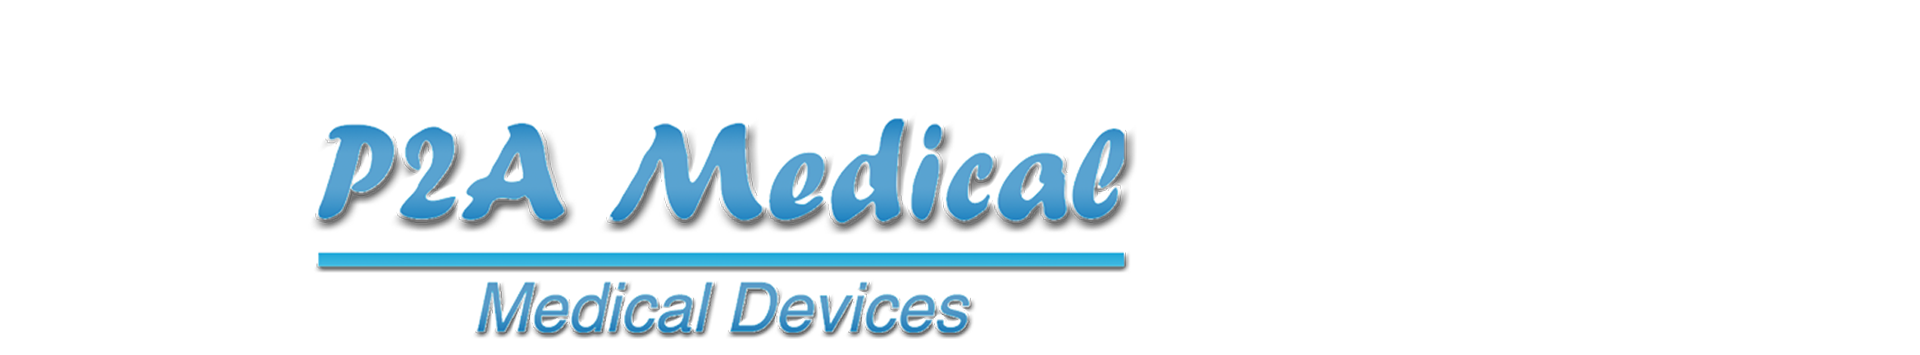 P2A MEDICAL Logo